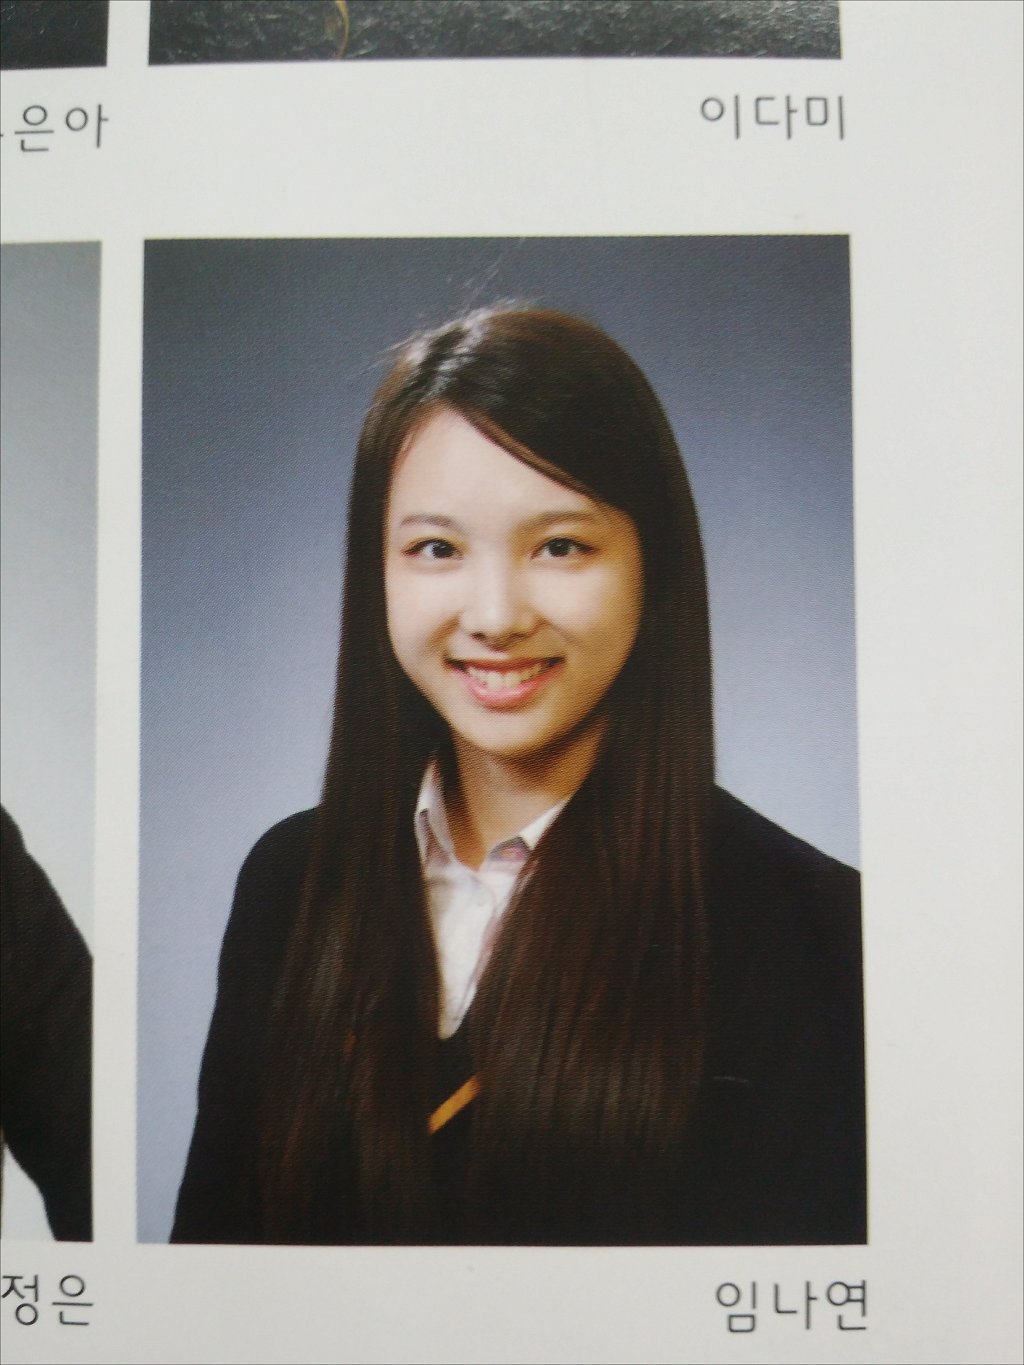 Nayeon's photos during high school - Celebrity Photos & Videos - OneHallyu